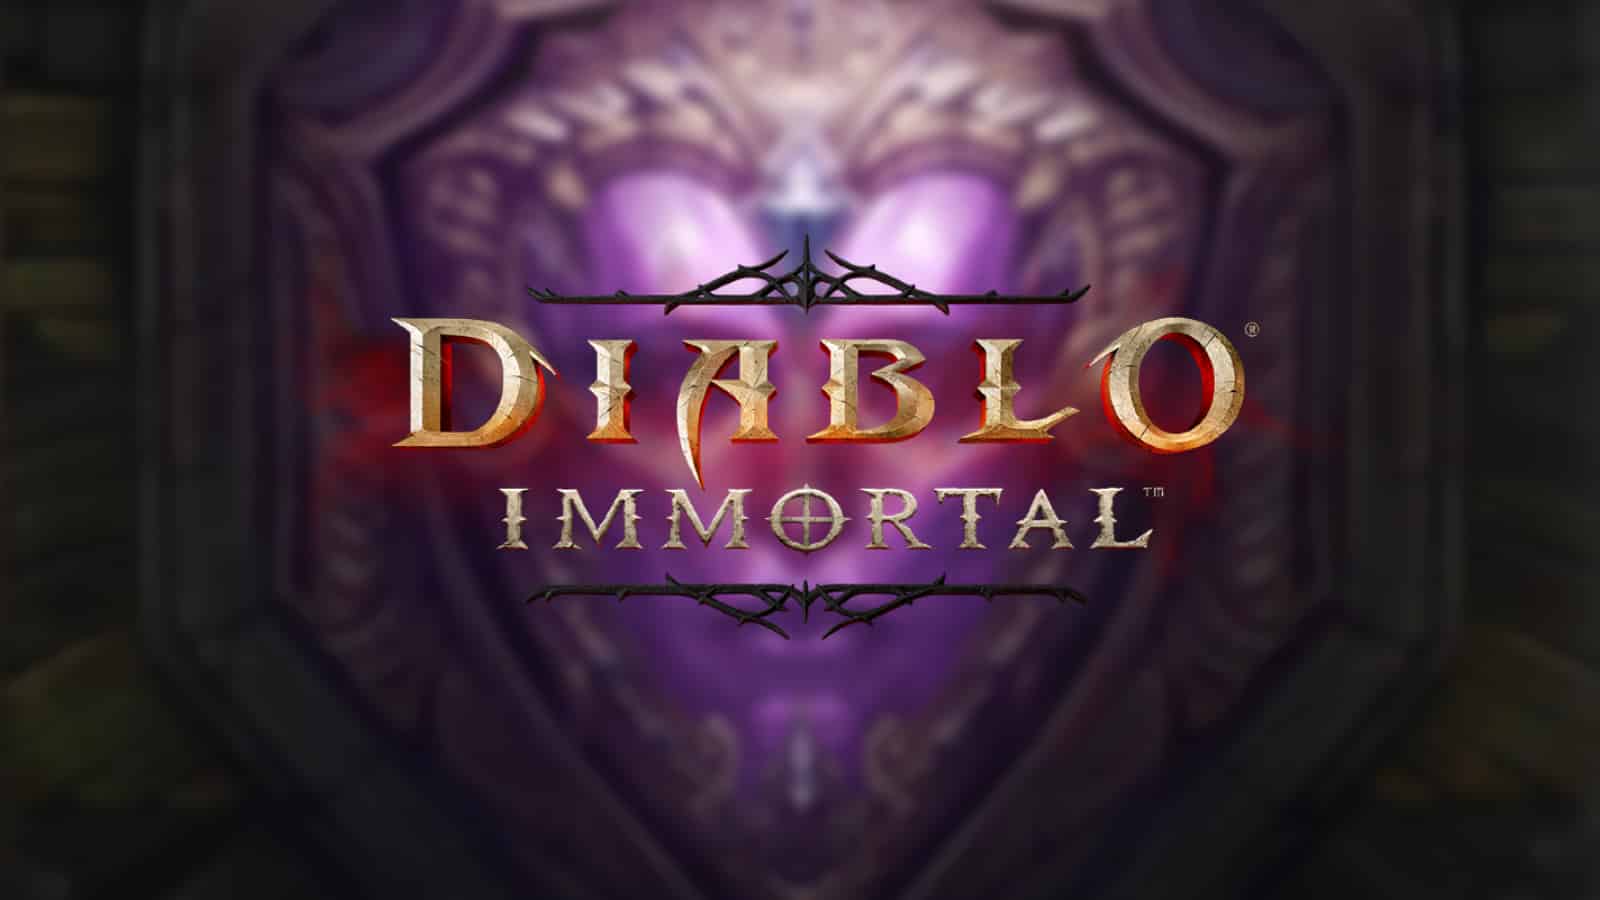 Battle Pass pay to win?!? - Closed Beta Diablo Immortal #2 : r/ DiabloImmortal